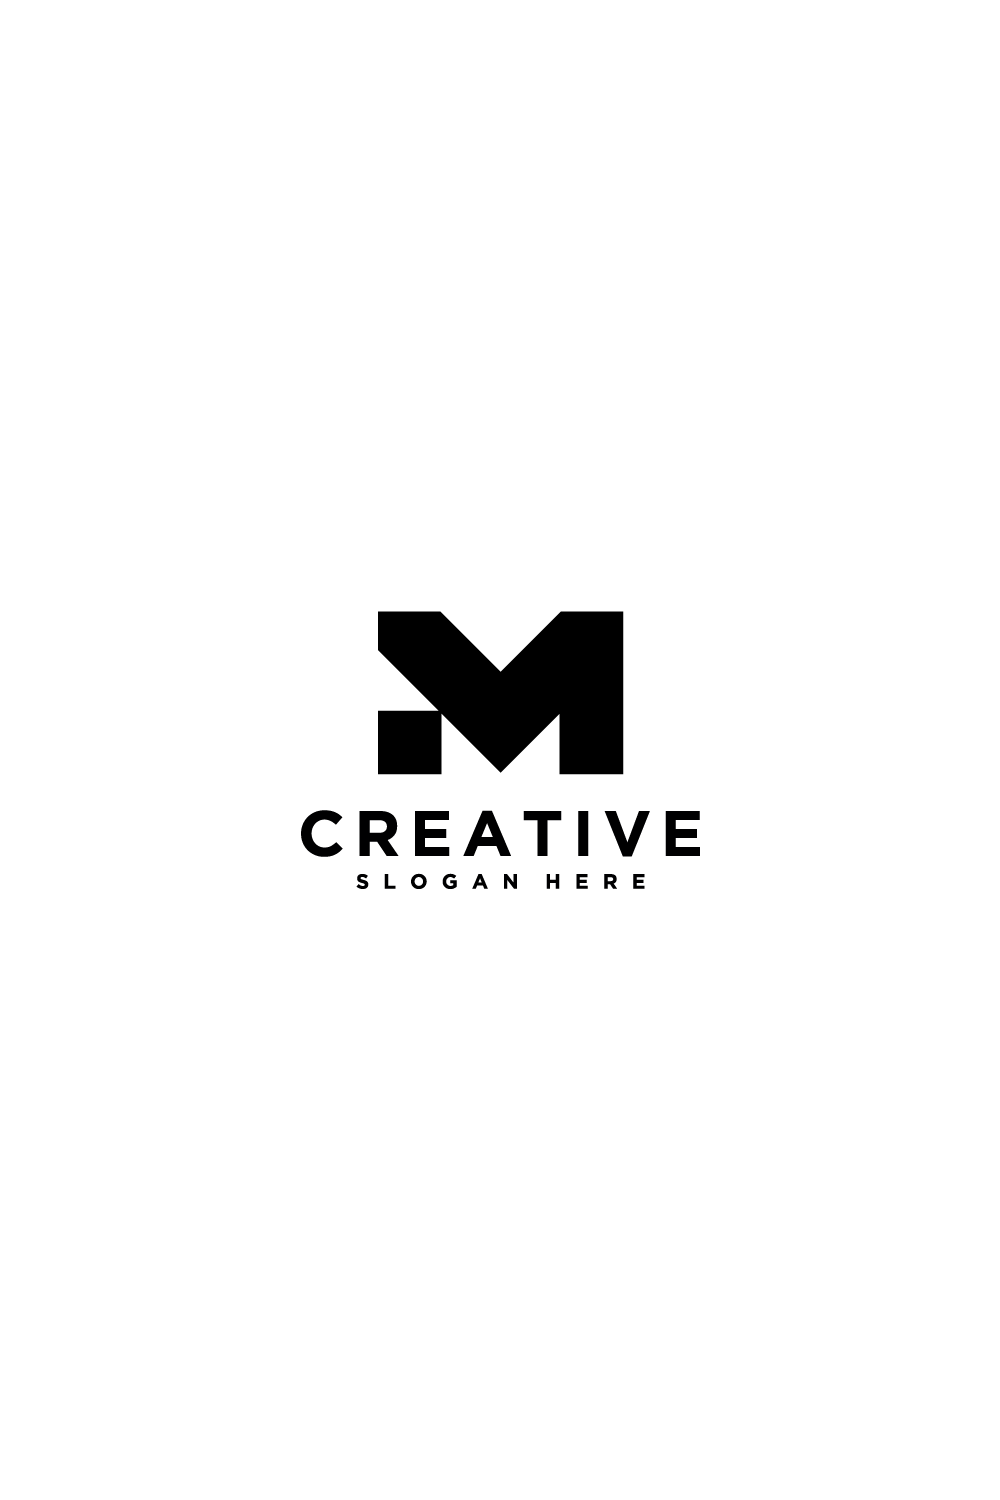 m letter logo design template pinterest preview image.